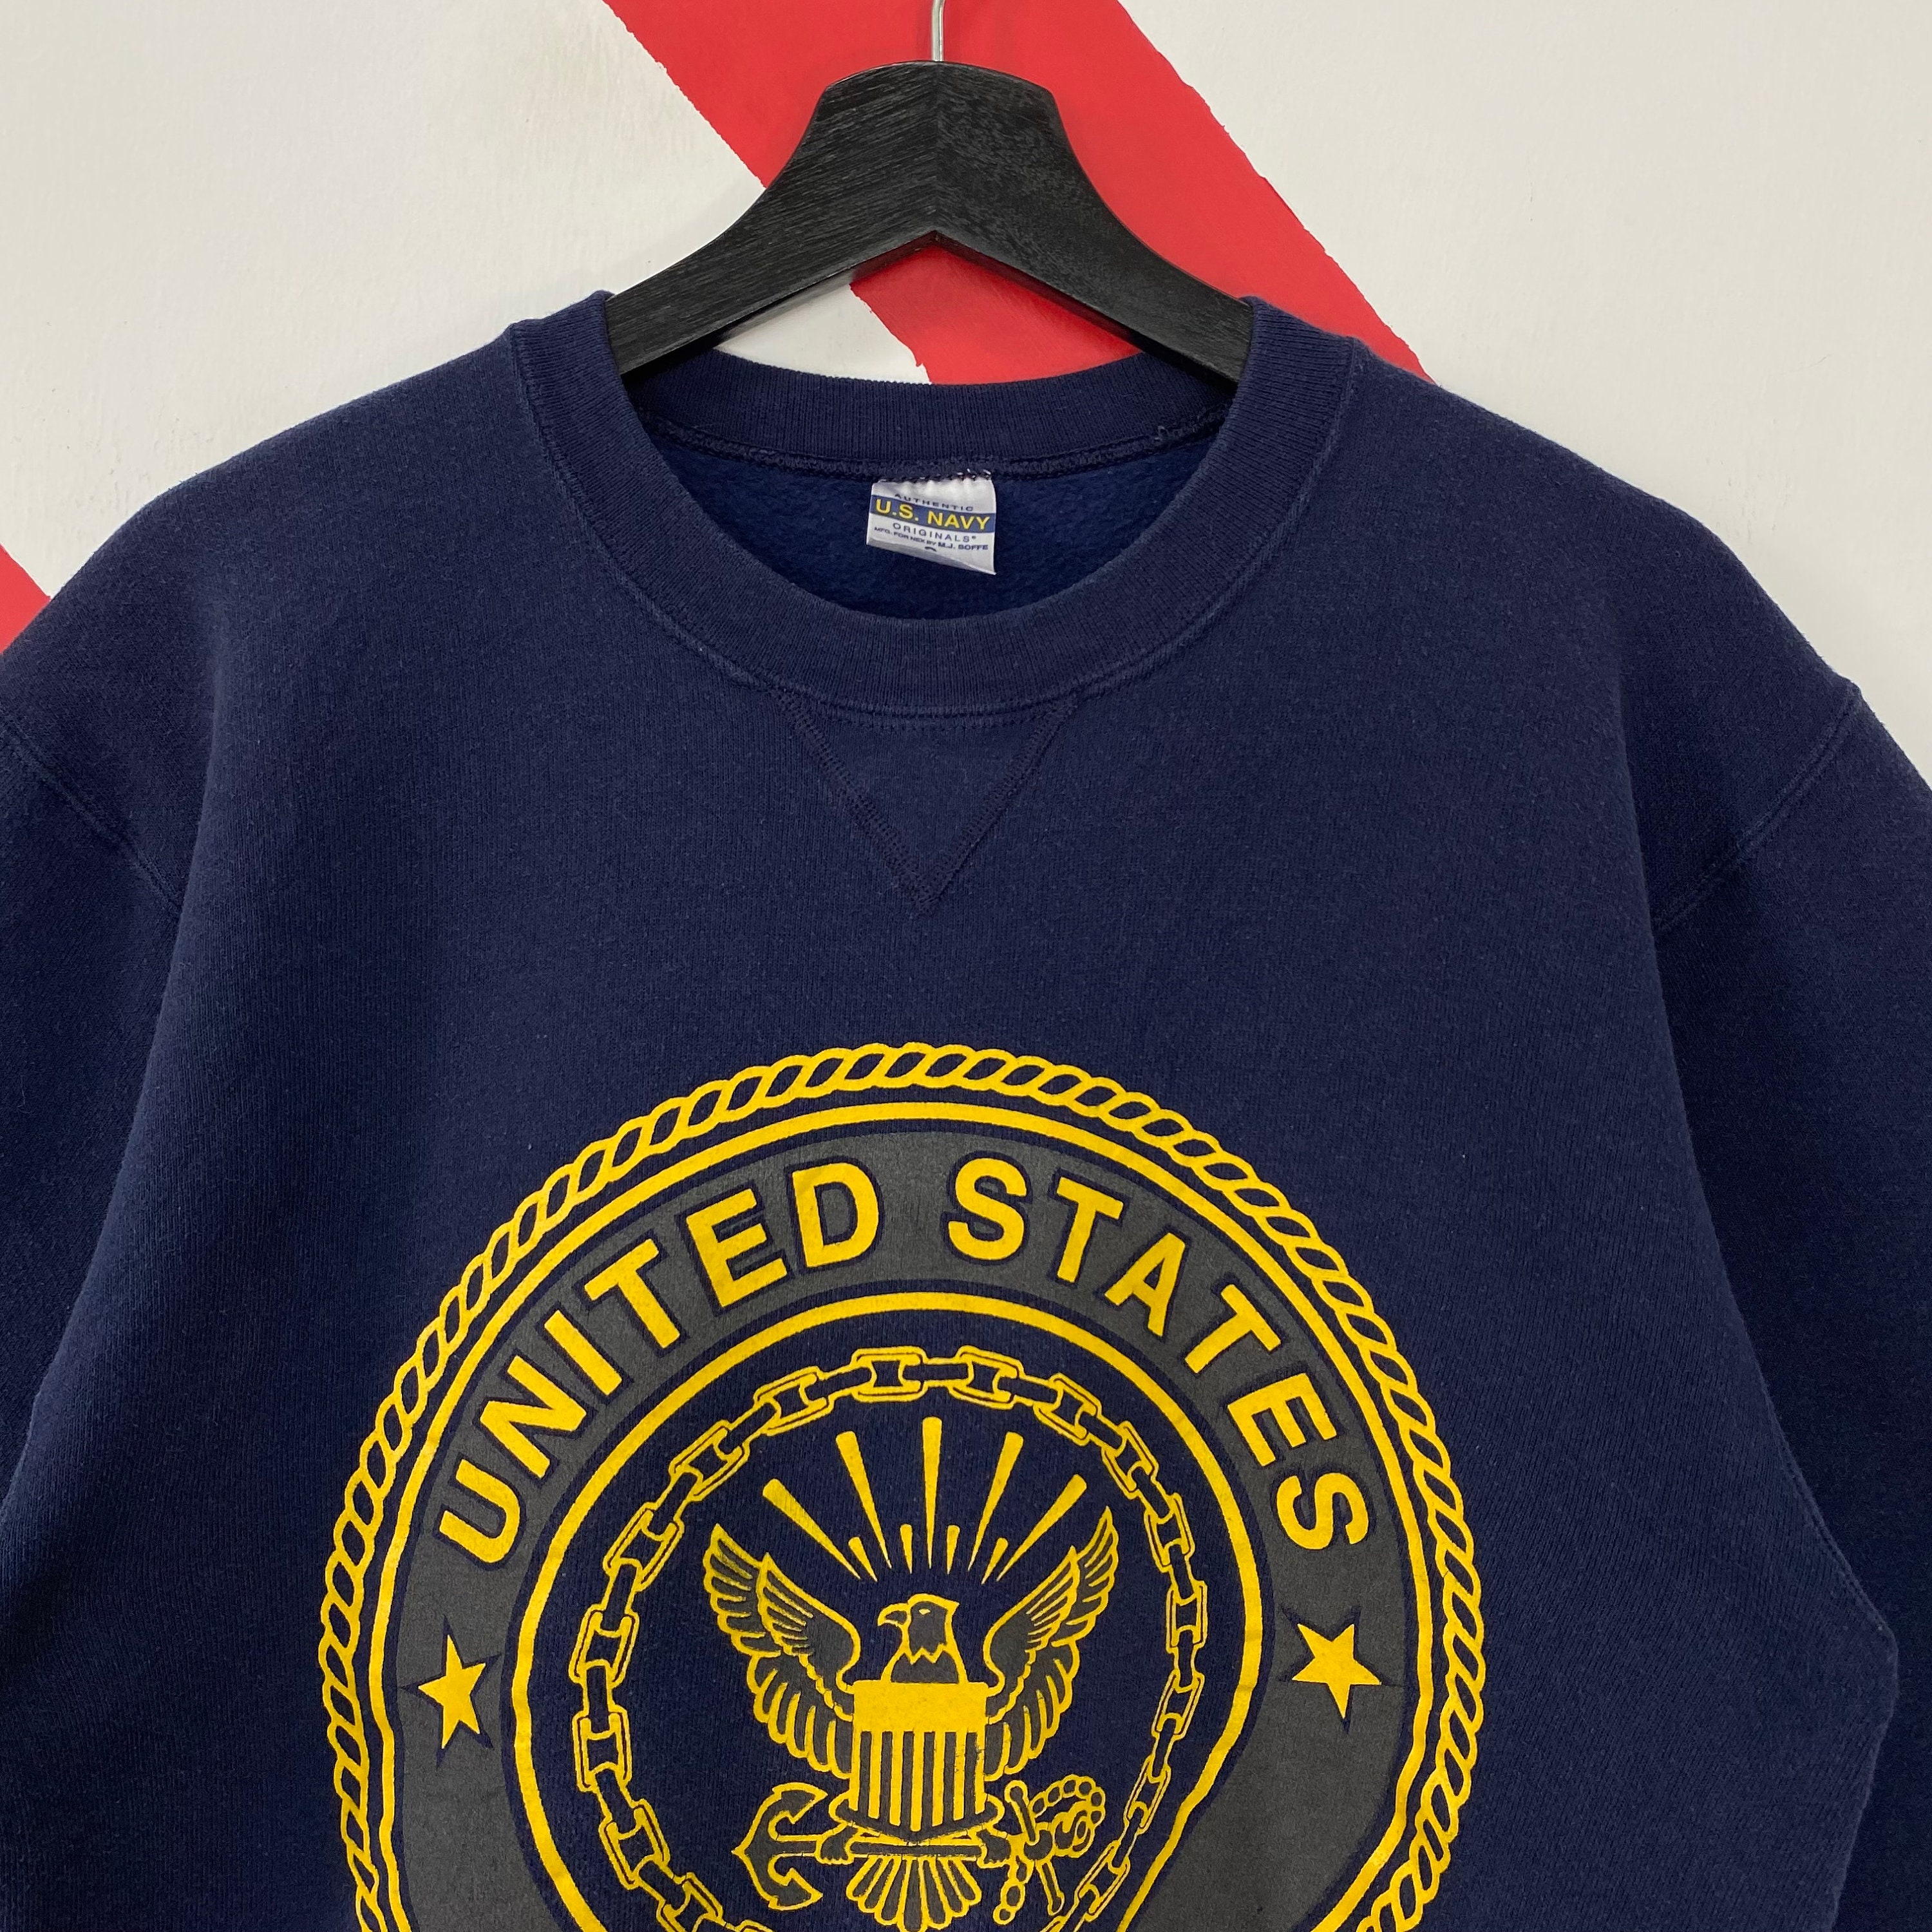 Vintage US Navy Sweatshirt US Navy Crewneck United State Navy - Etsy